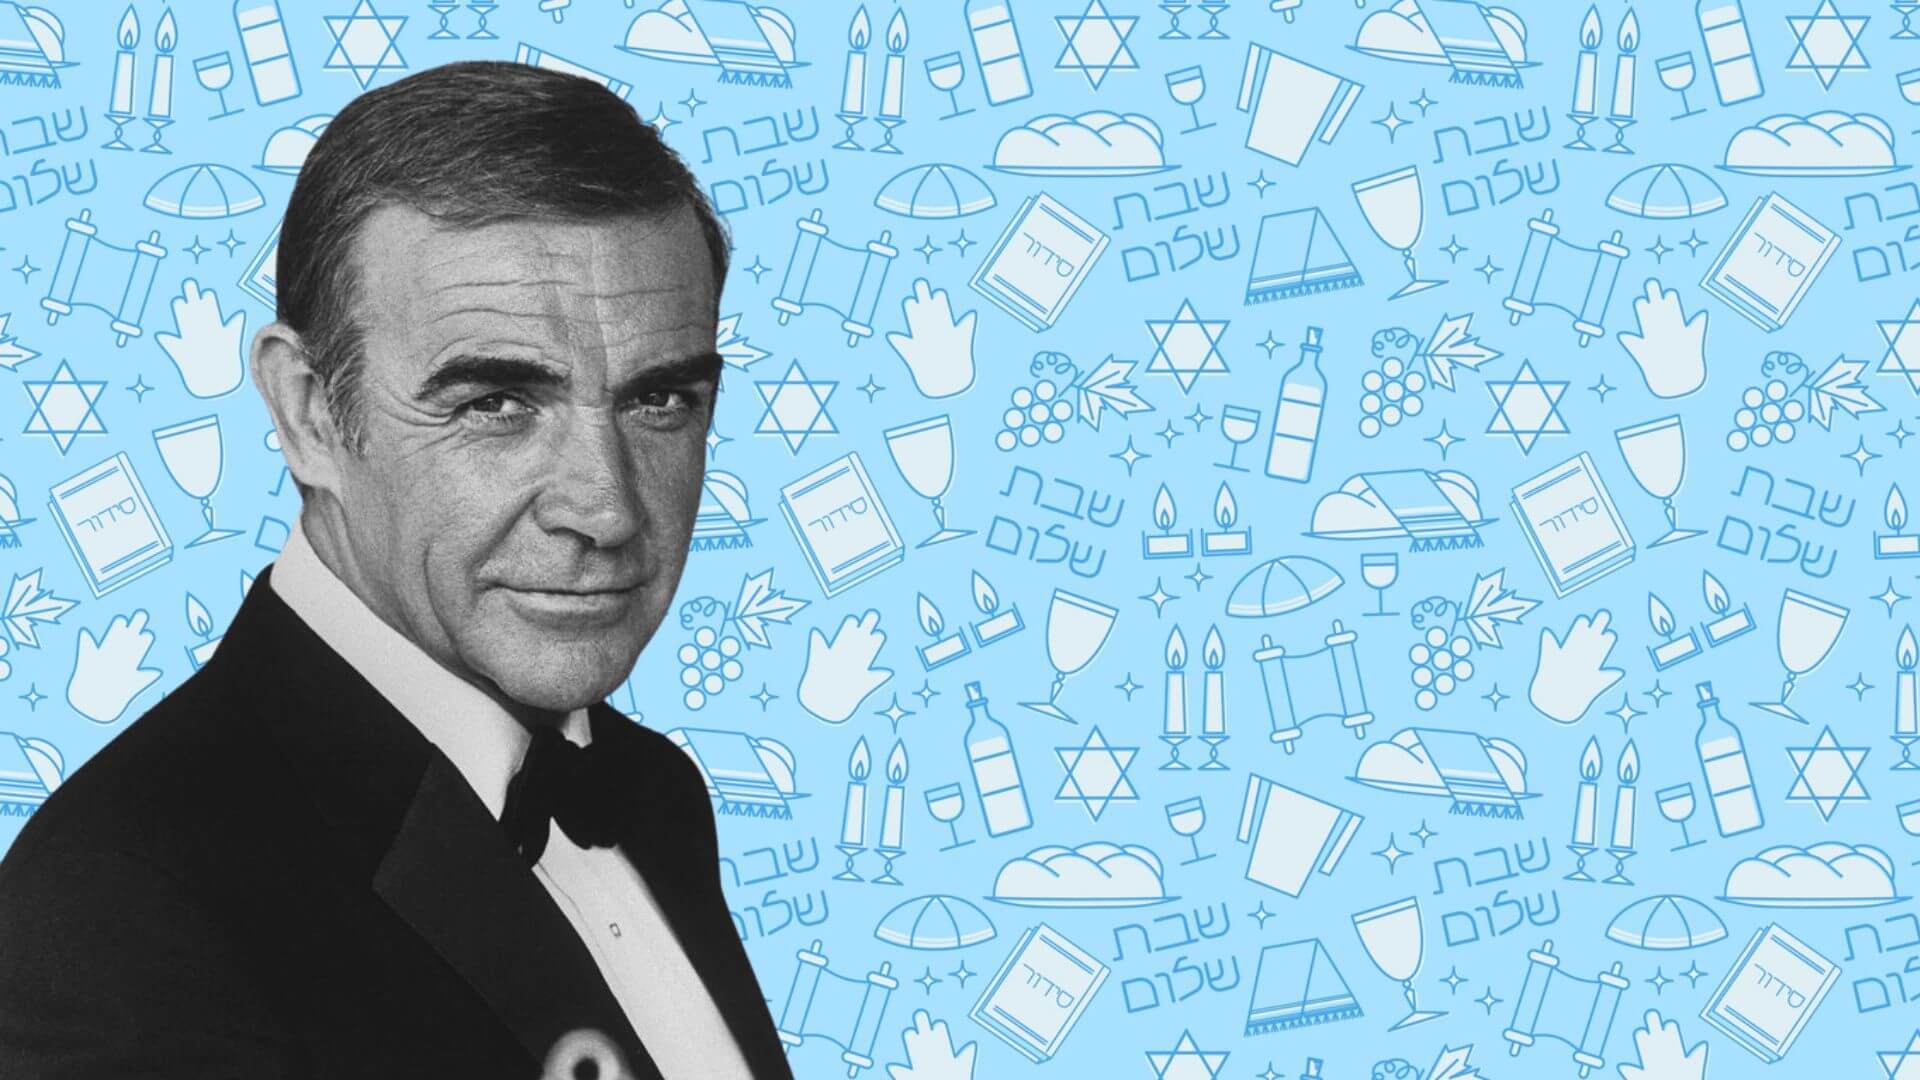 Sean Connery as a Jewish James Bond.